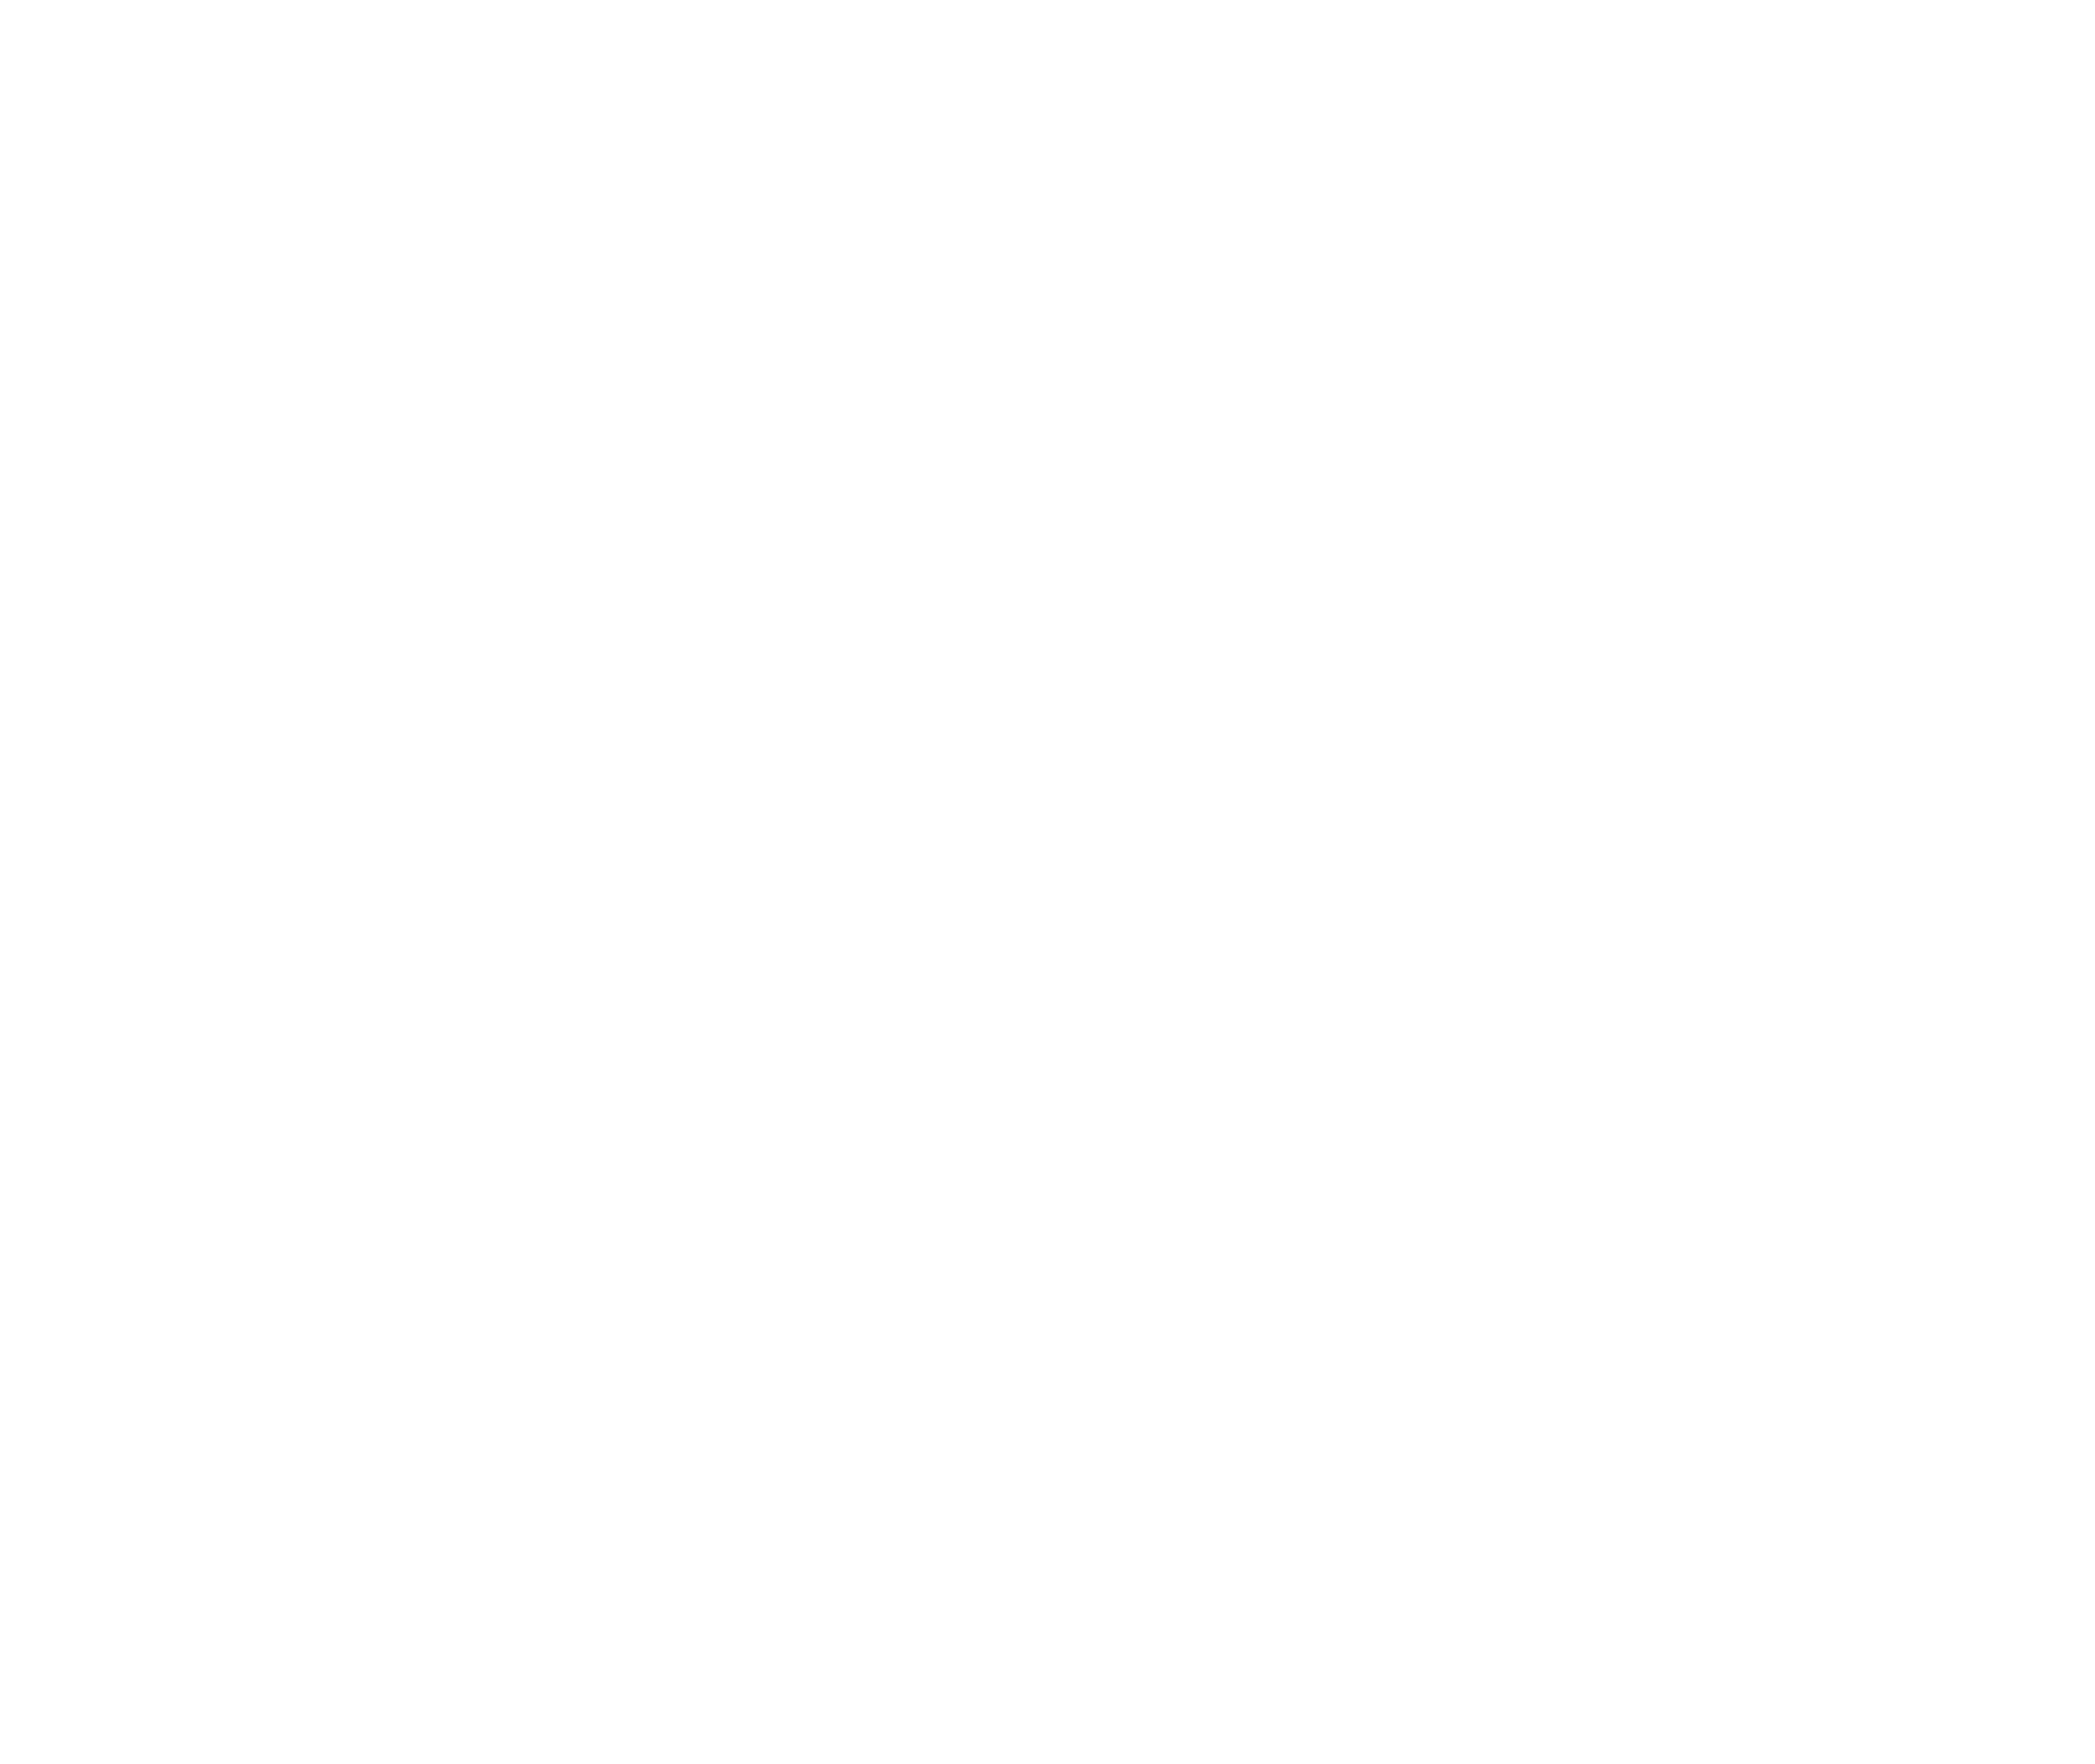 StolCo Designs